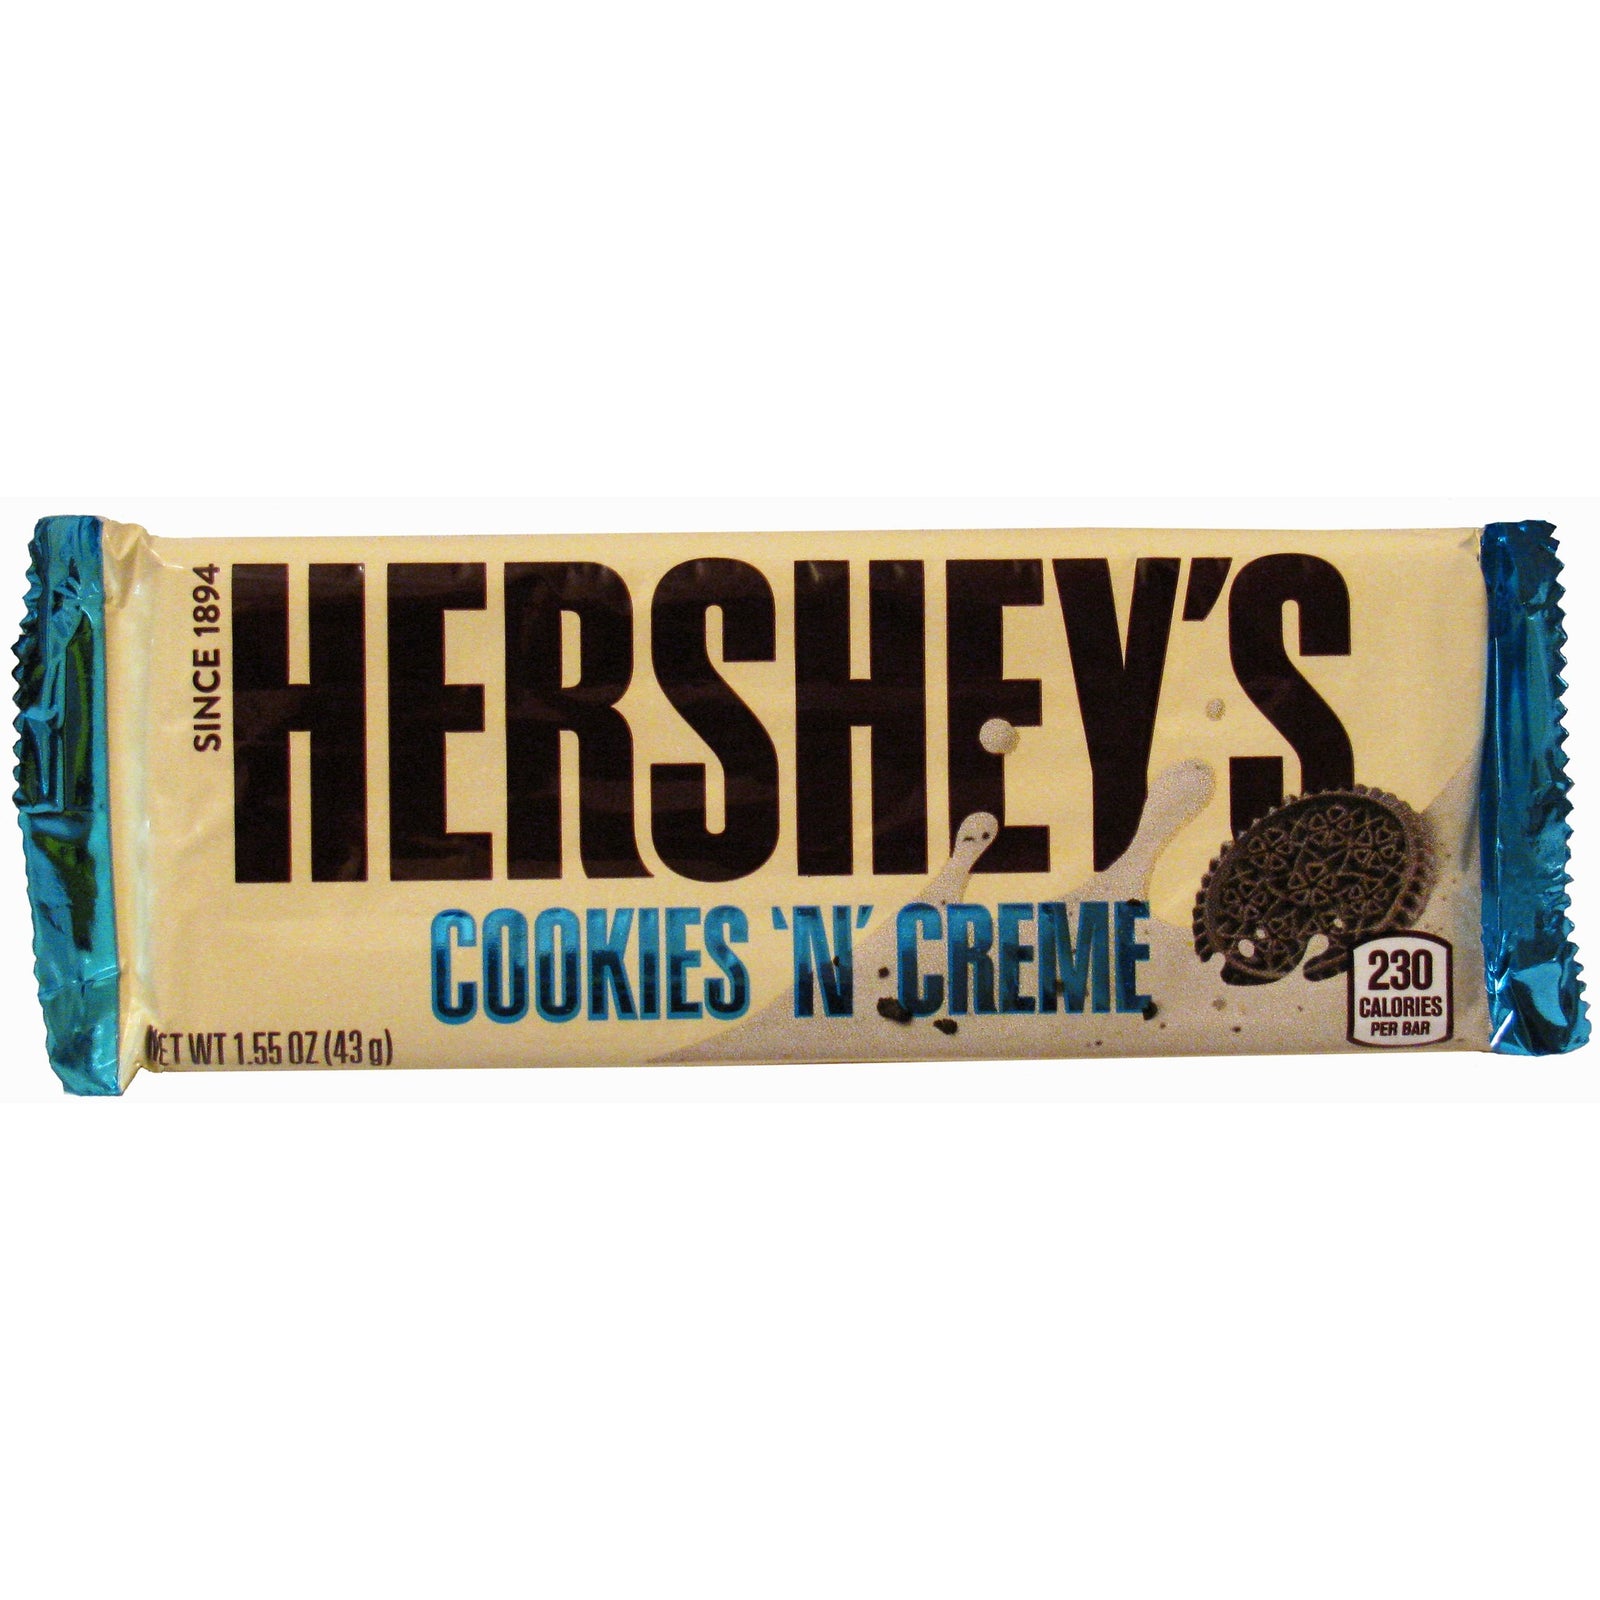 Hershey's Cookies 'N' Creme Candy Bar